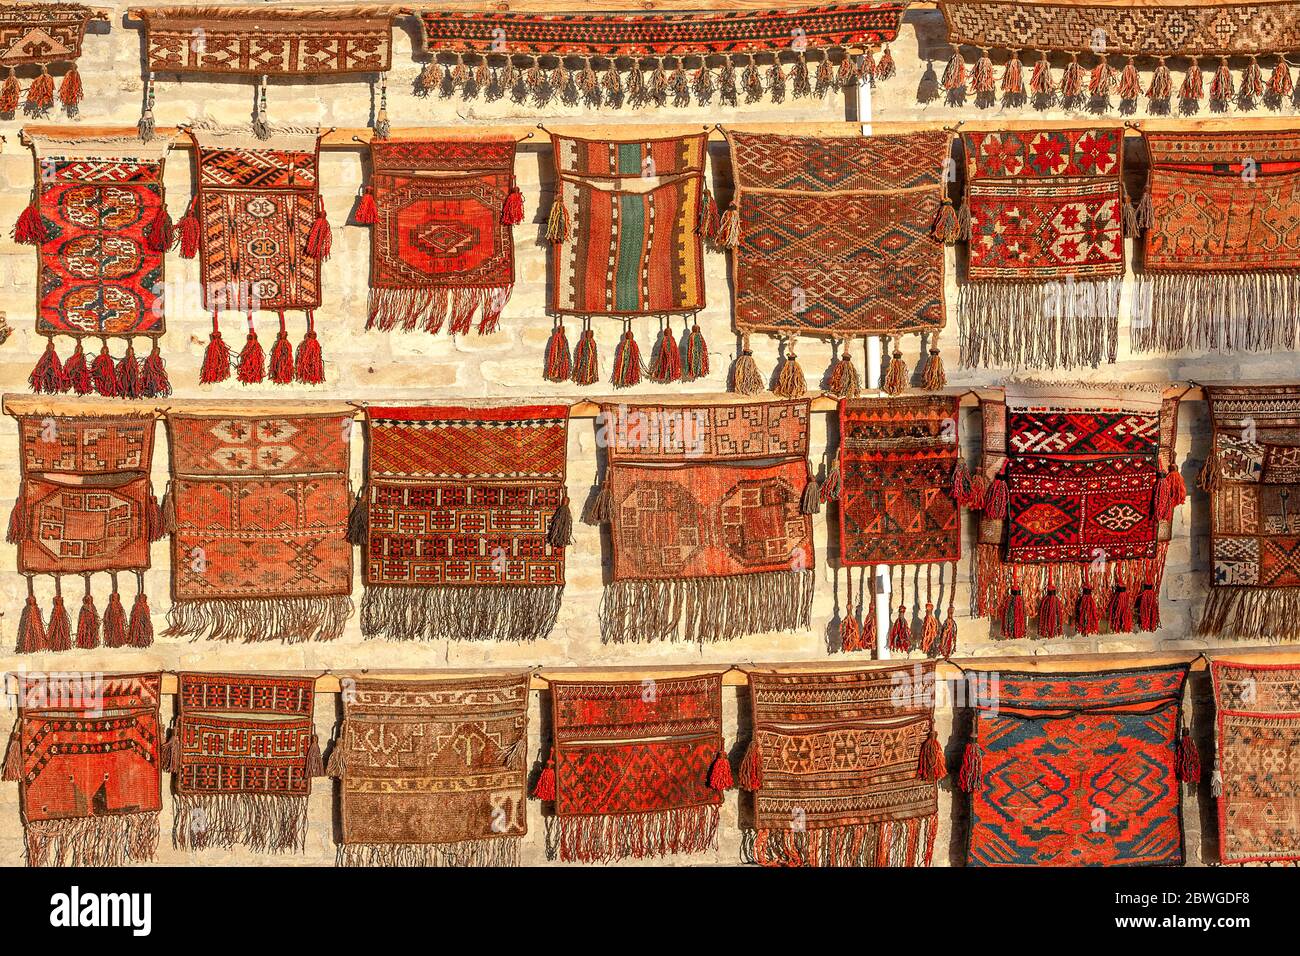 Tappeti orientali e tappeti colorati fatti a mano, Bukhara, Uzbekistan Foto Stock